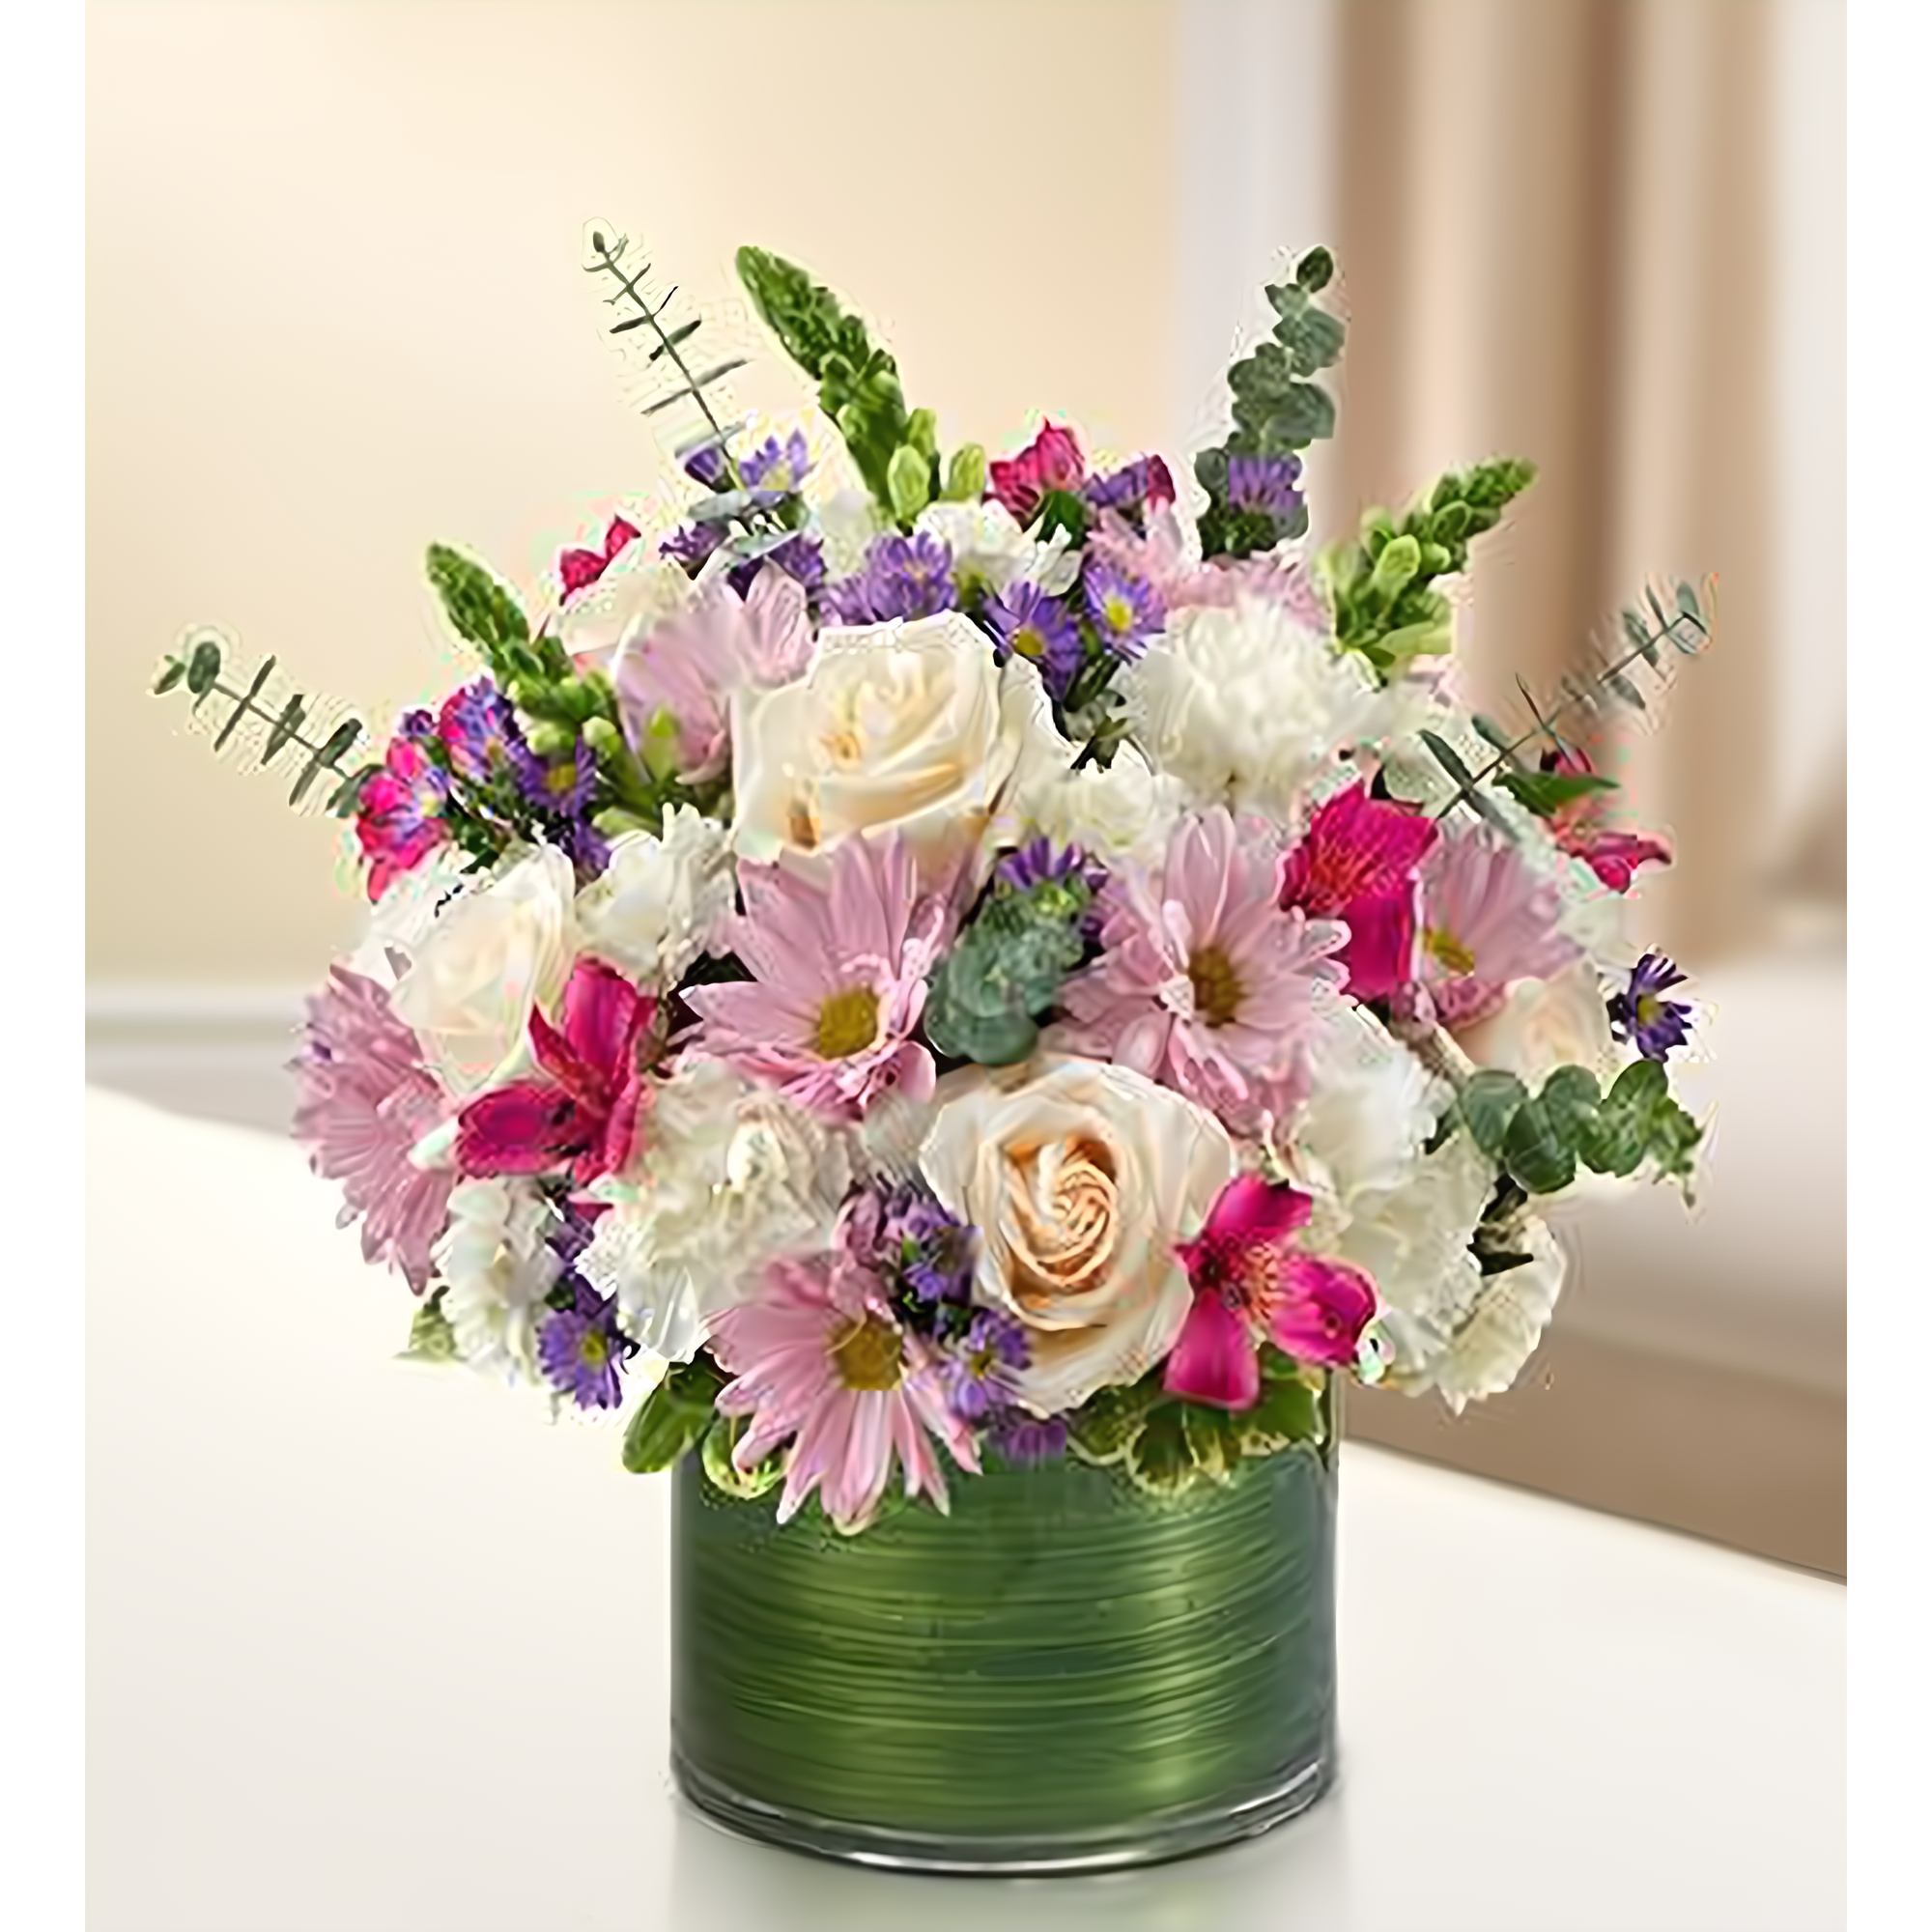 Manhattan Flower Delivery - Cherished Memories - Lavender and White - Funeral > Vase Arrangements